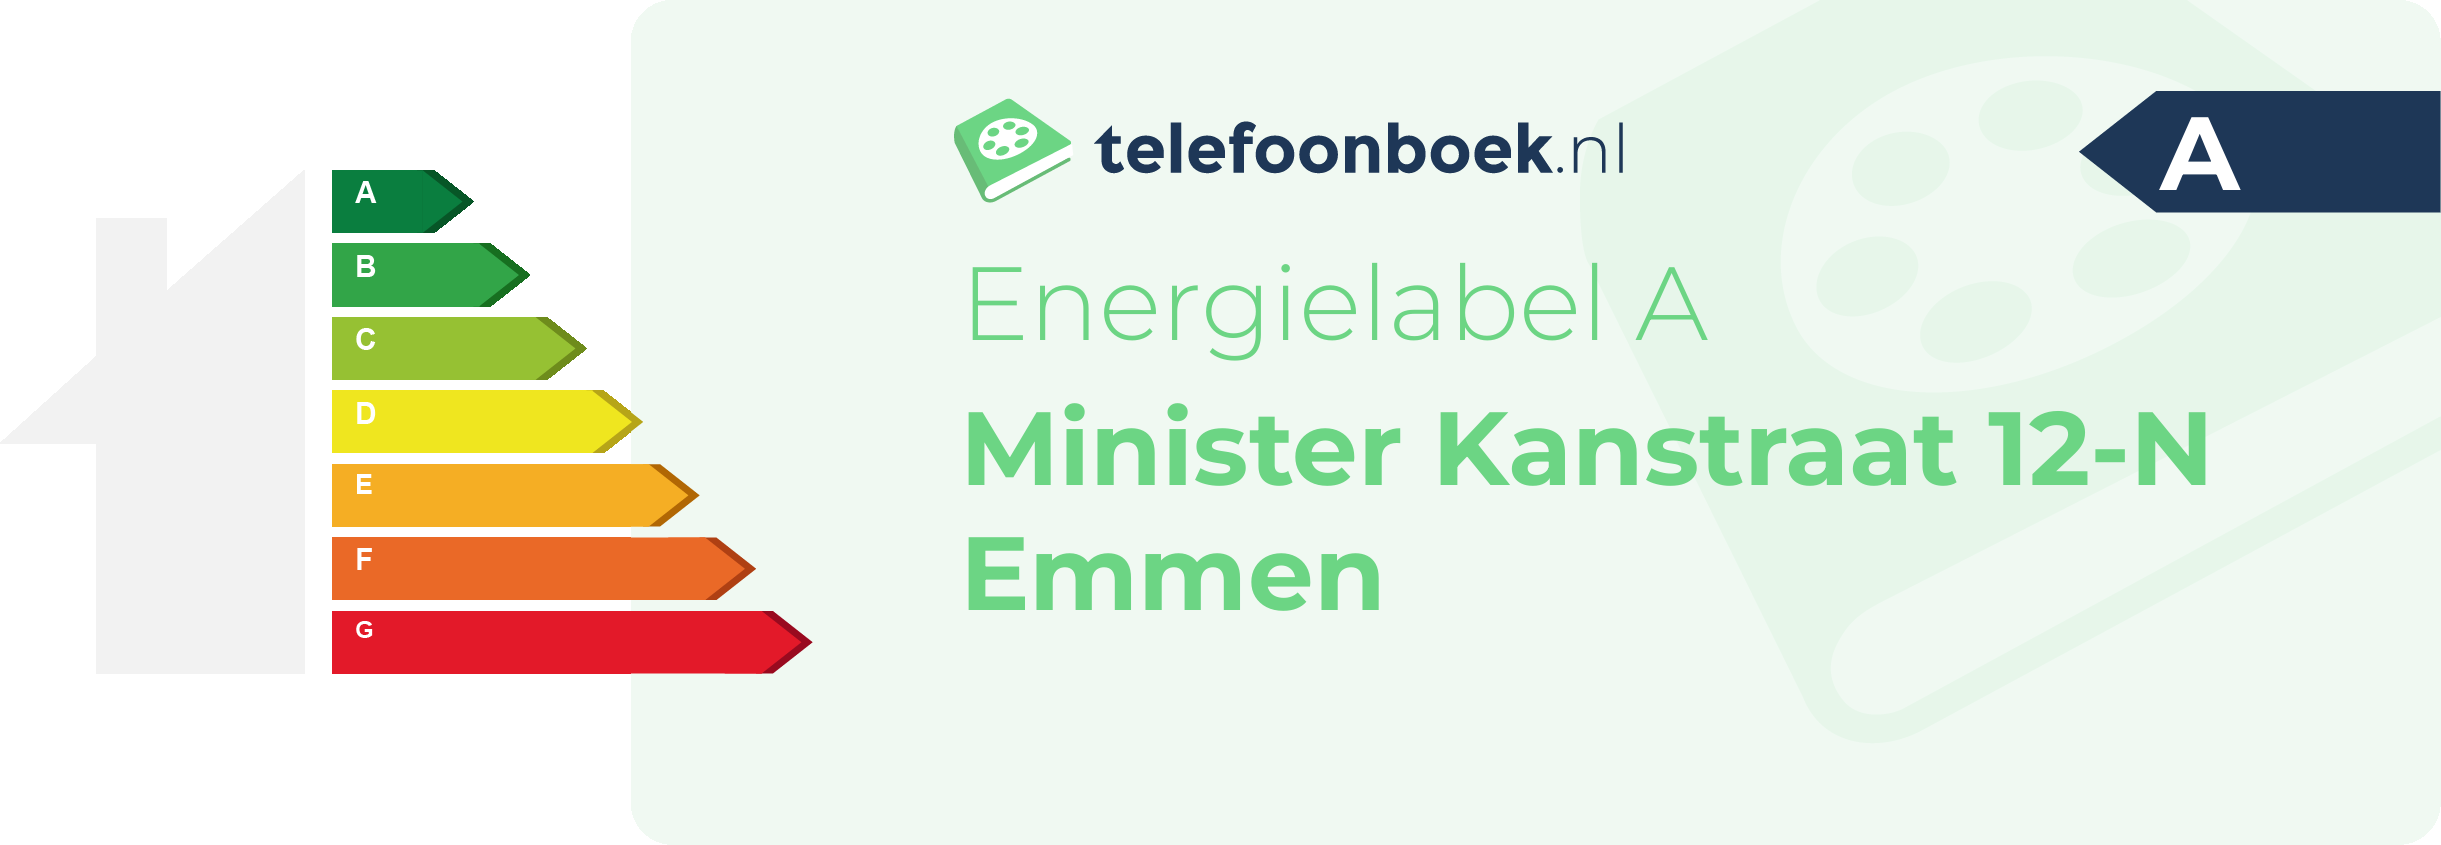 Energielabel Minister Kanstraat 12-N Emmen